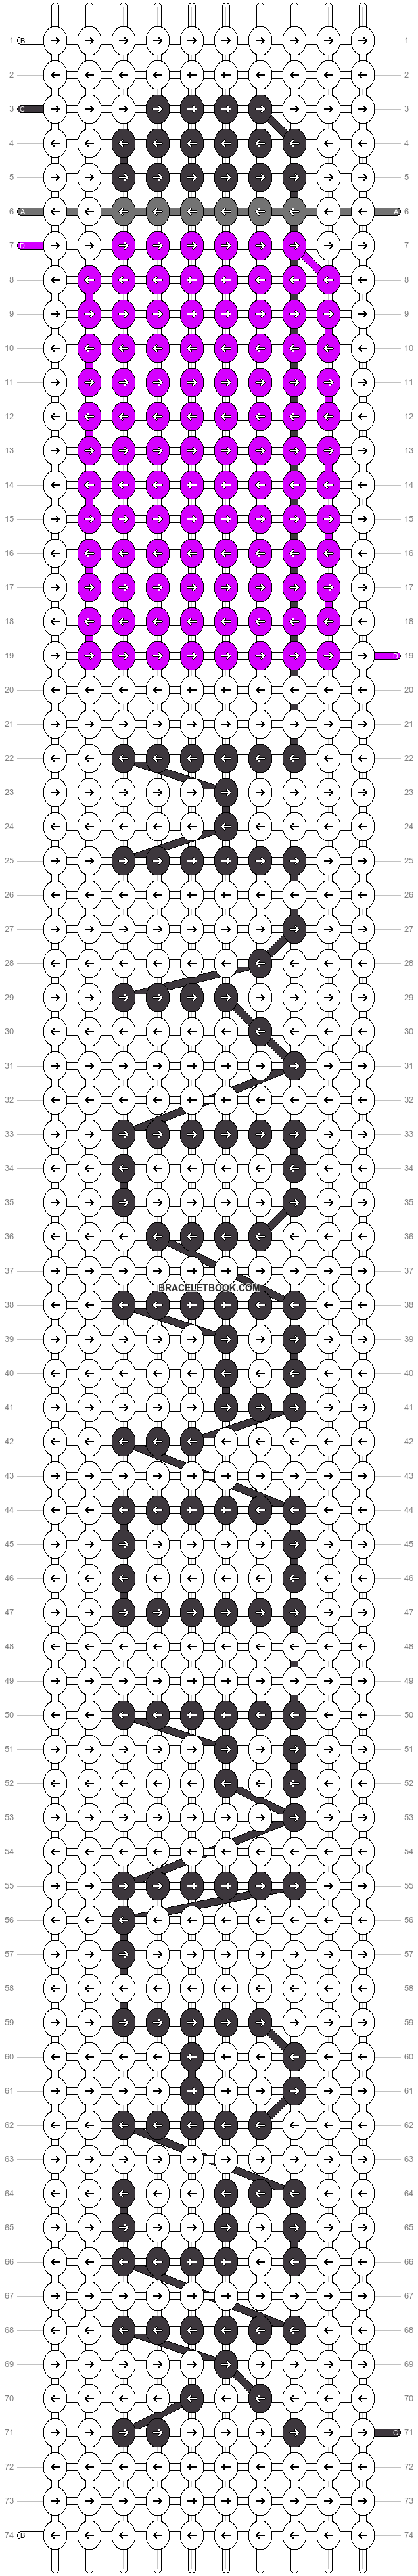 Alpha pattern #27828 variation #13116 pattern